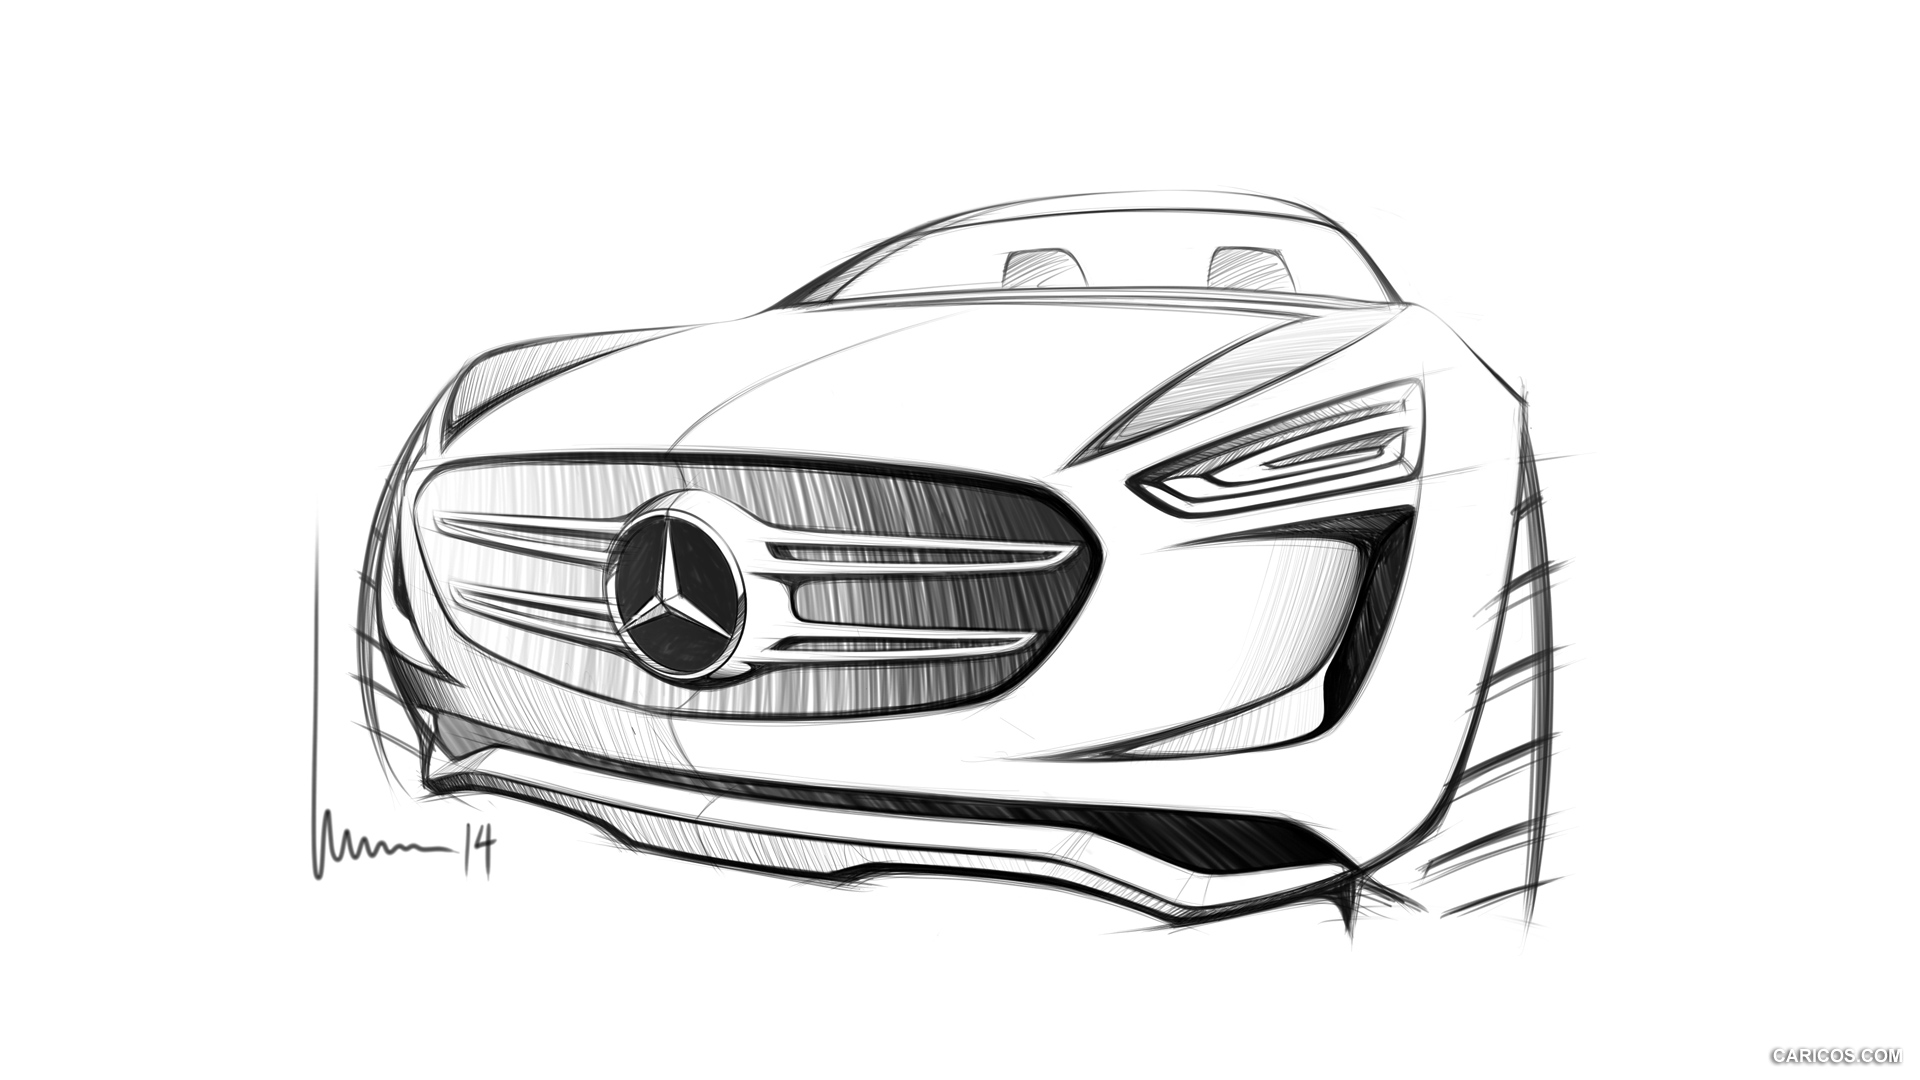 2014 Mercedes-Benz Vision G-Code SUC Concept  - Design Sketch, #17 of 19